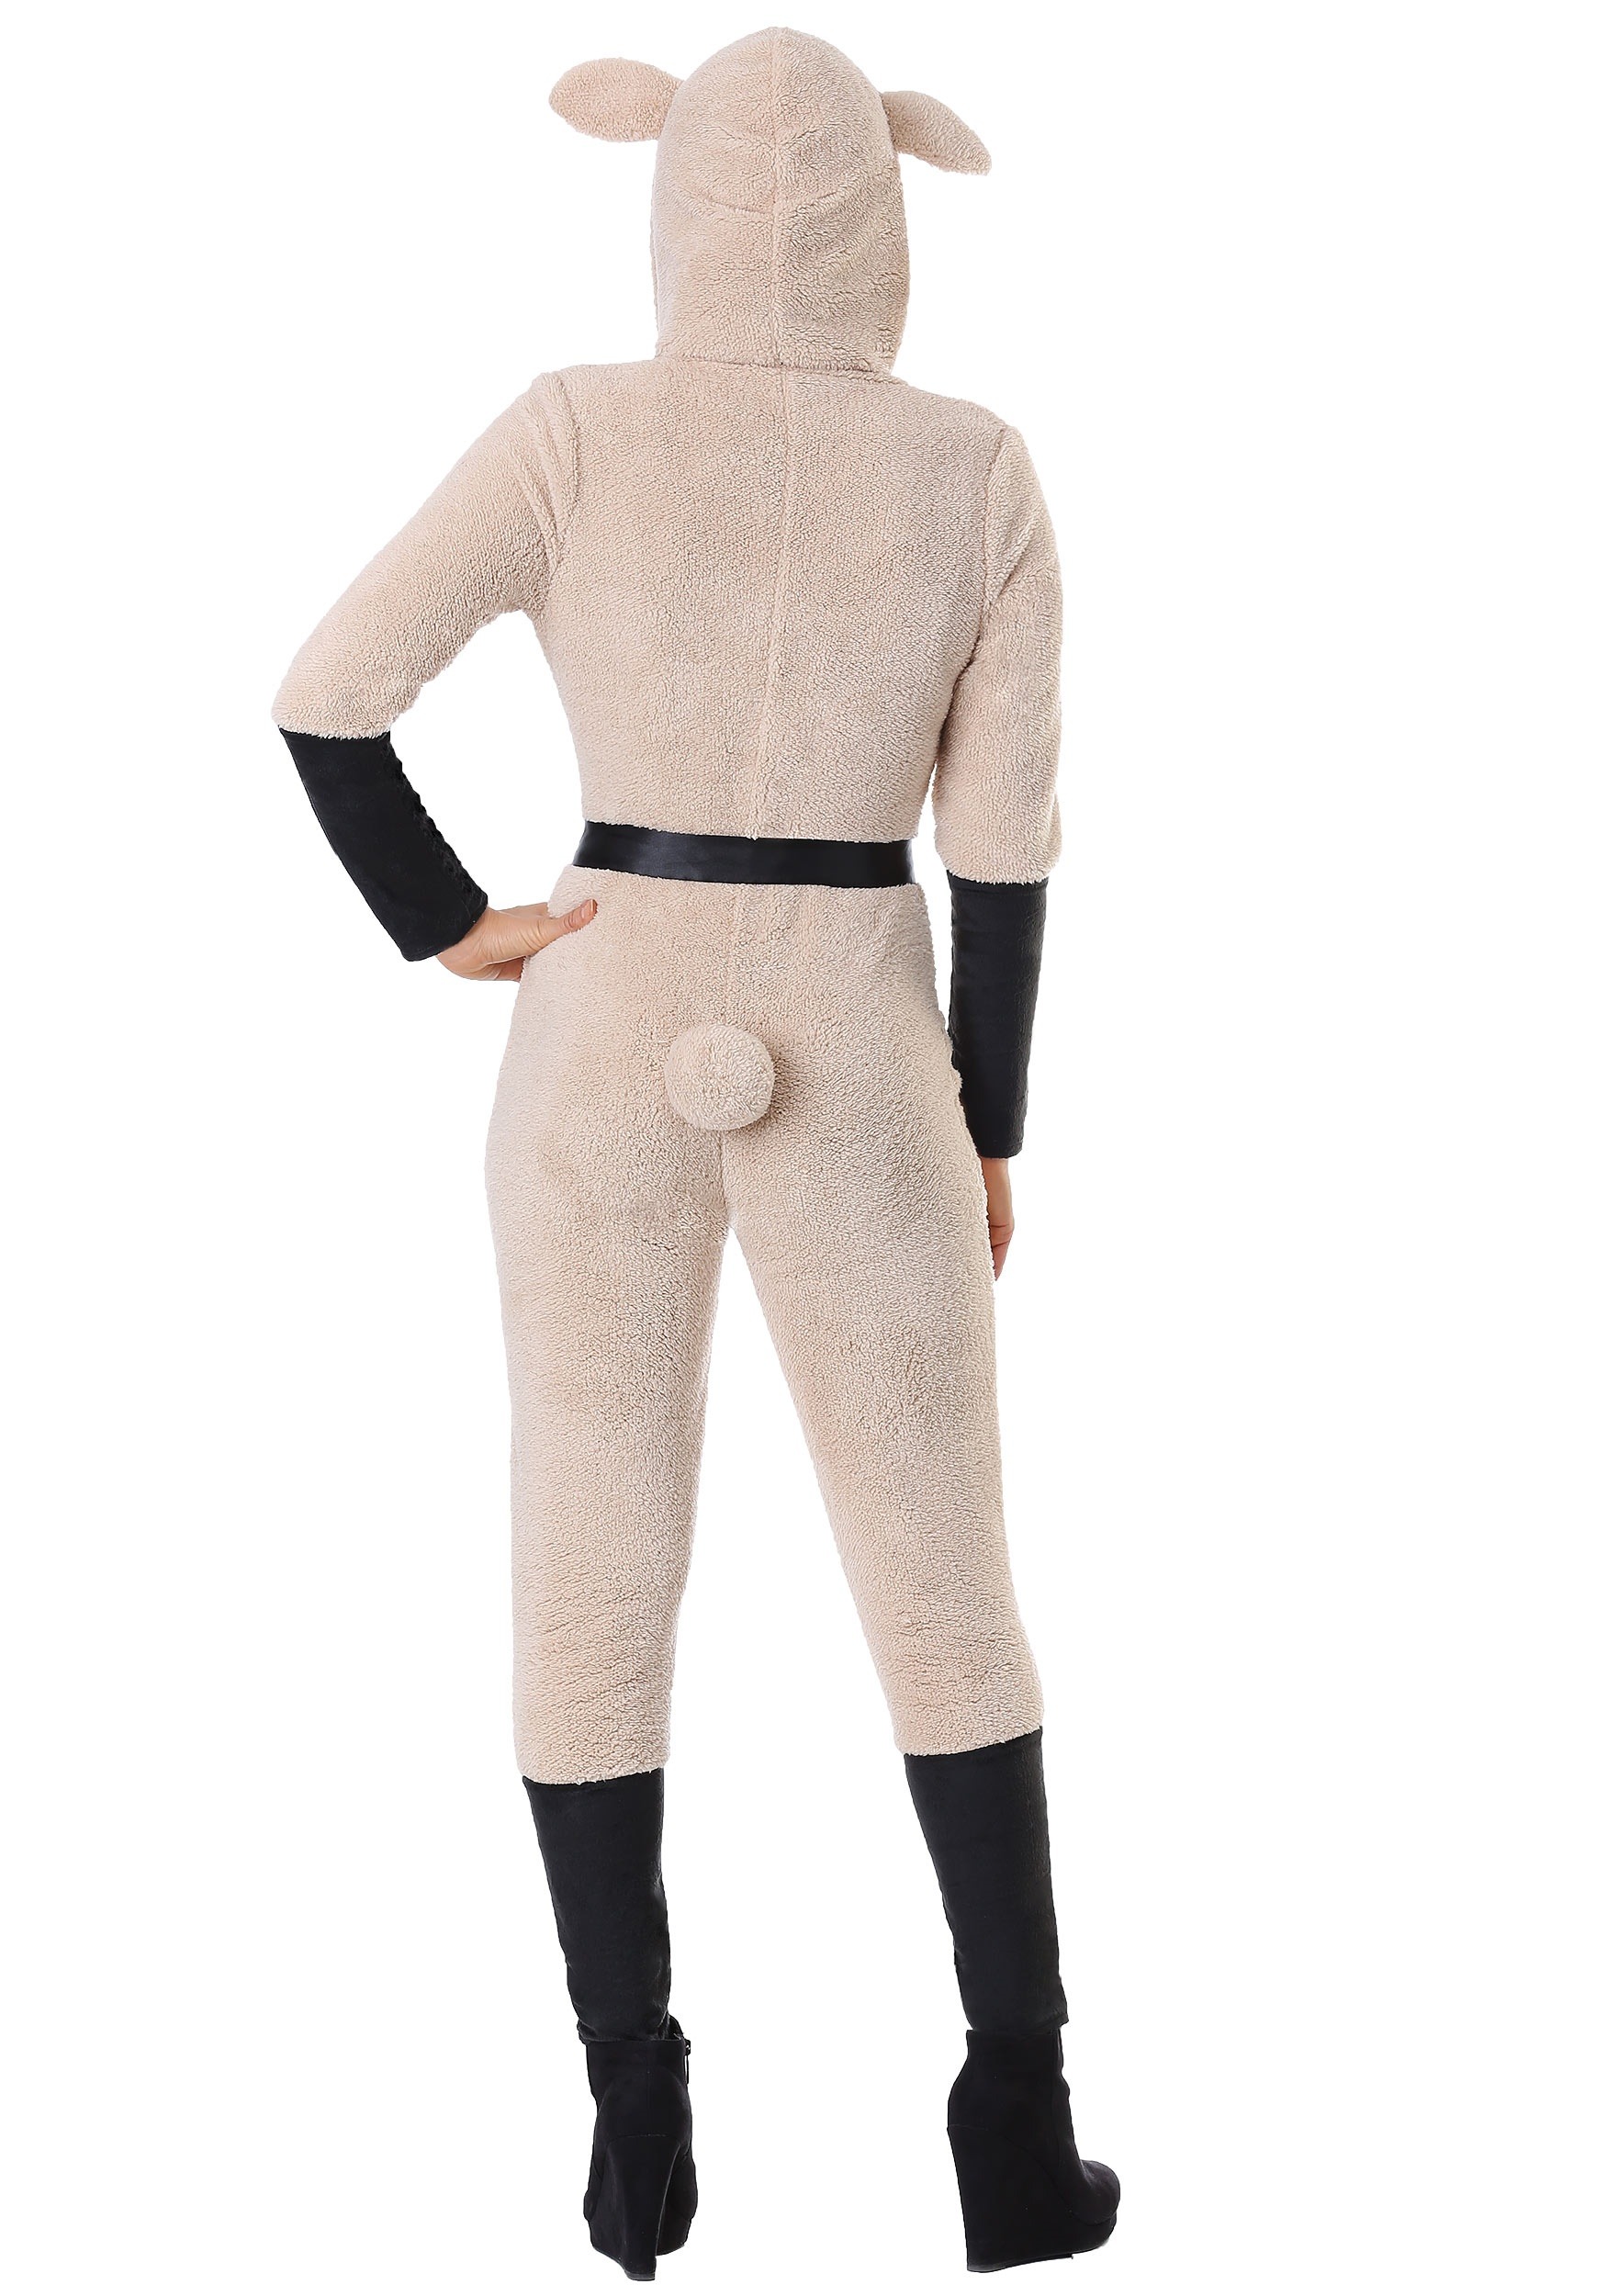 Women's Sheep Jumpsuit Costume